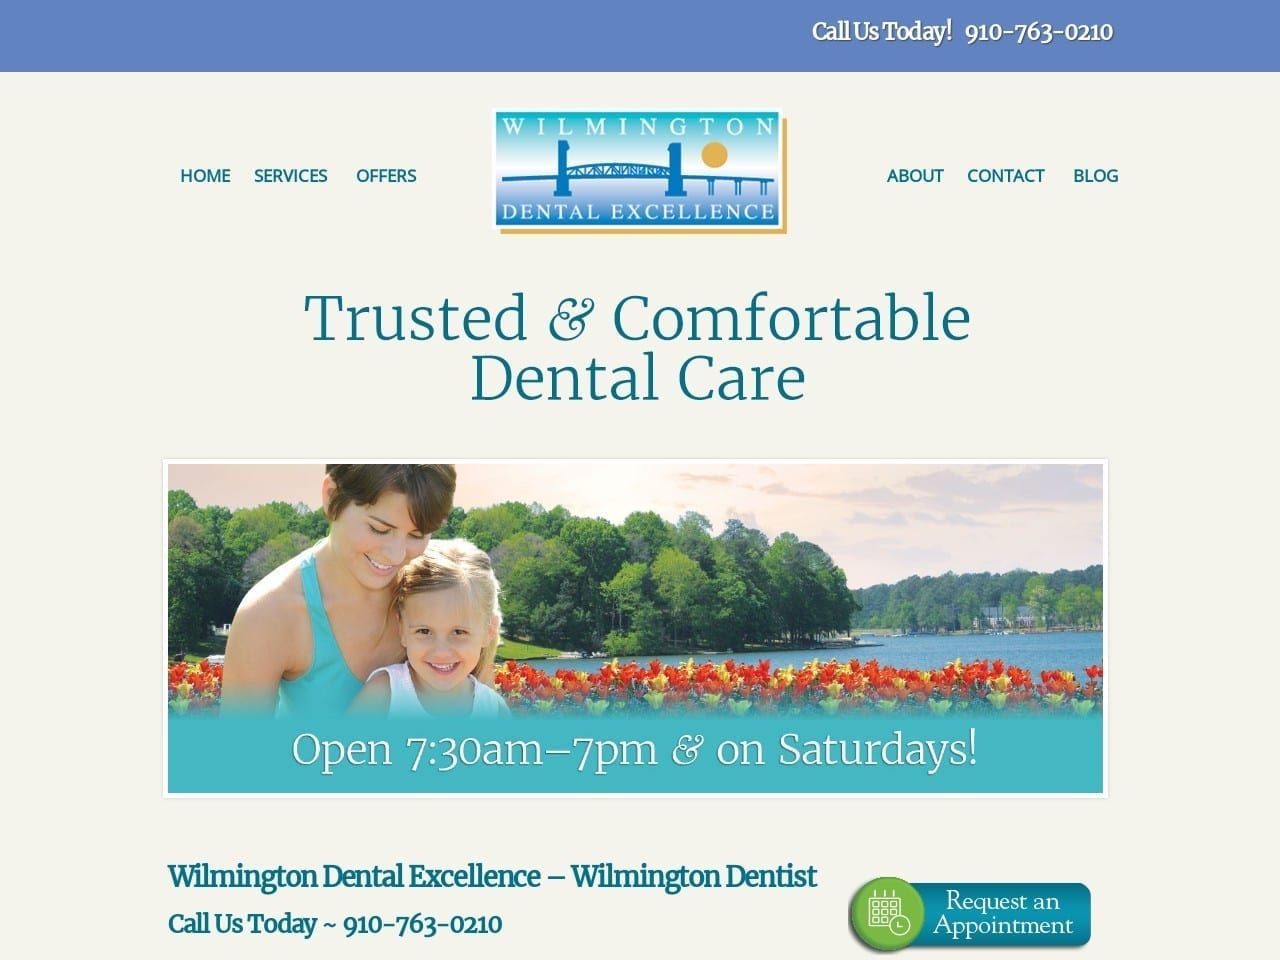 Wilmington Dental Excellence Website Screenshot from wilmingtondentalexcellence.com